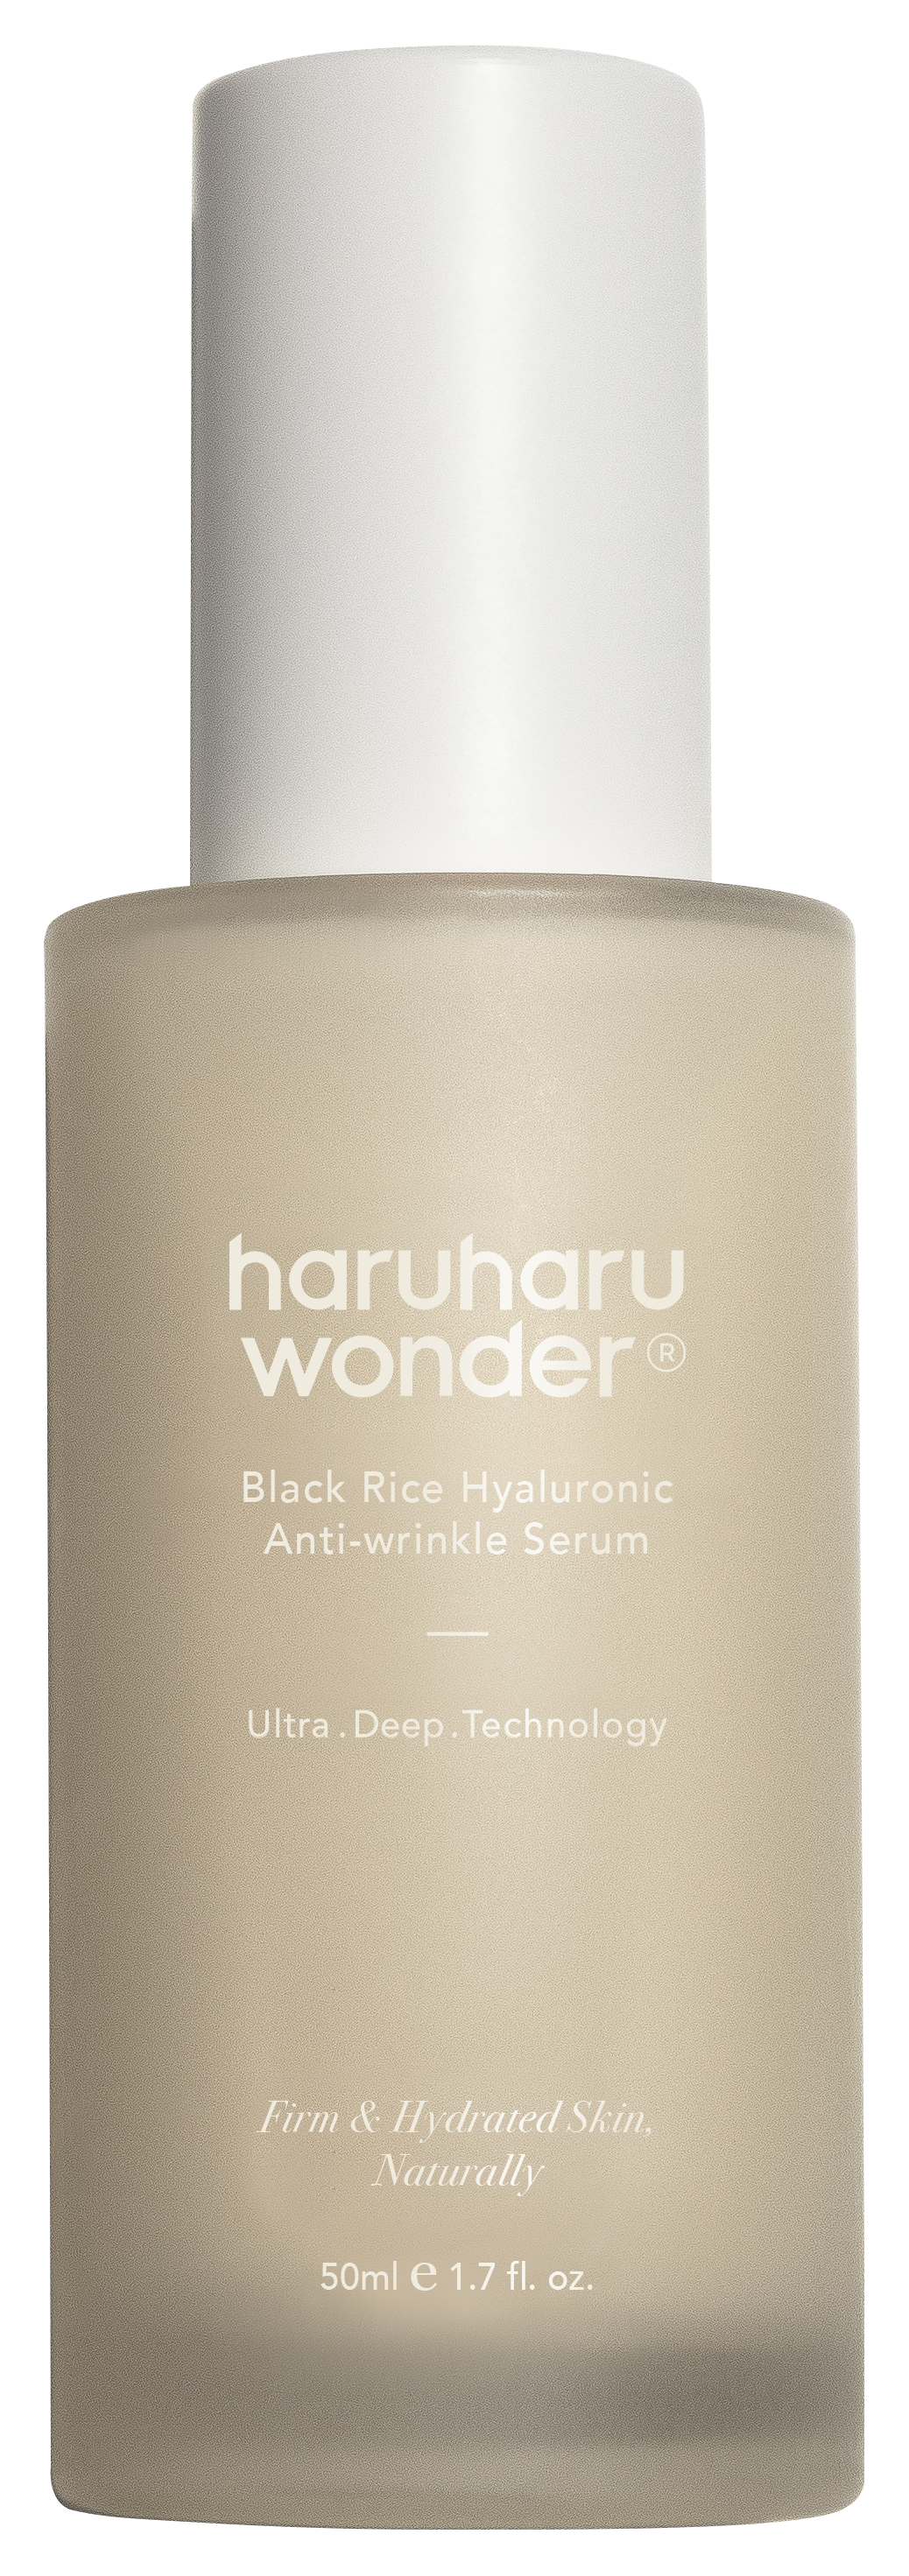 Haruharu Wonder Black Rice Hyaluronic Anti-Wrinkle Serum 1.6 fl. oz / 50 ml